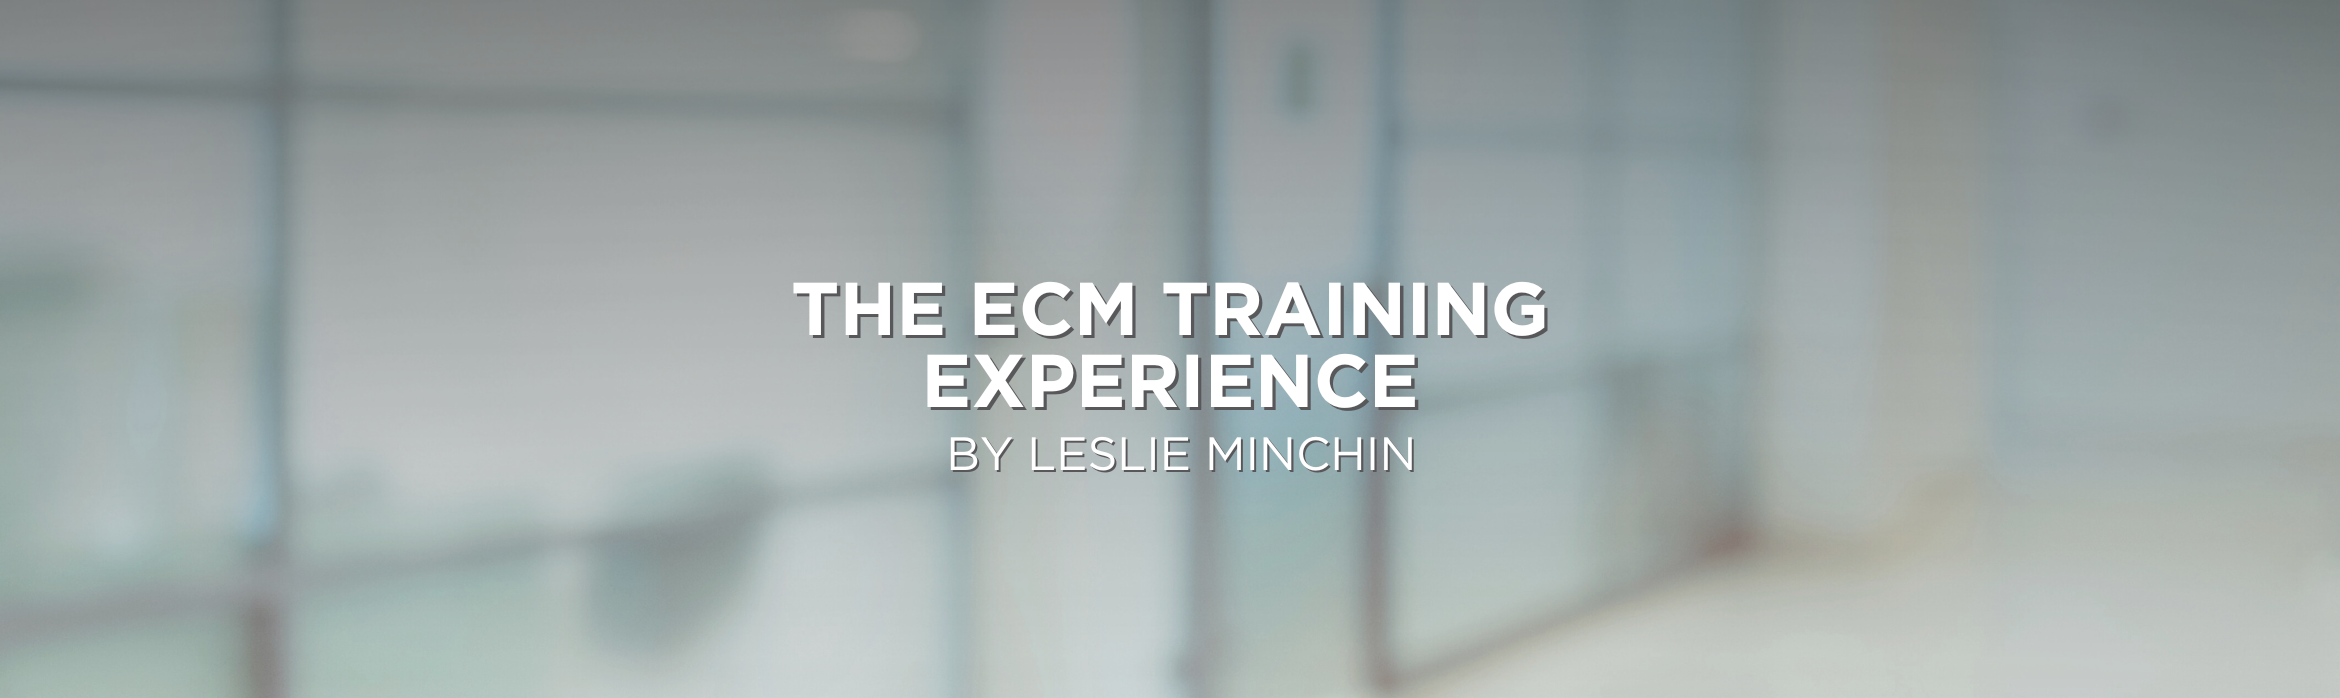 The ECM Training Experience